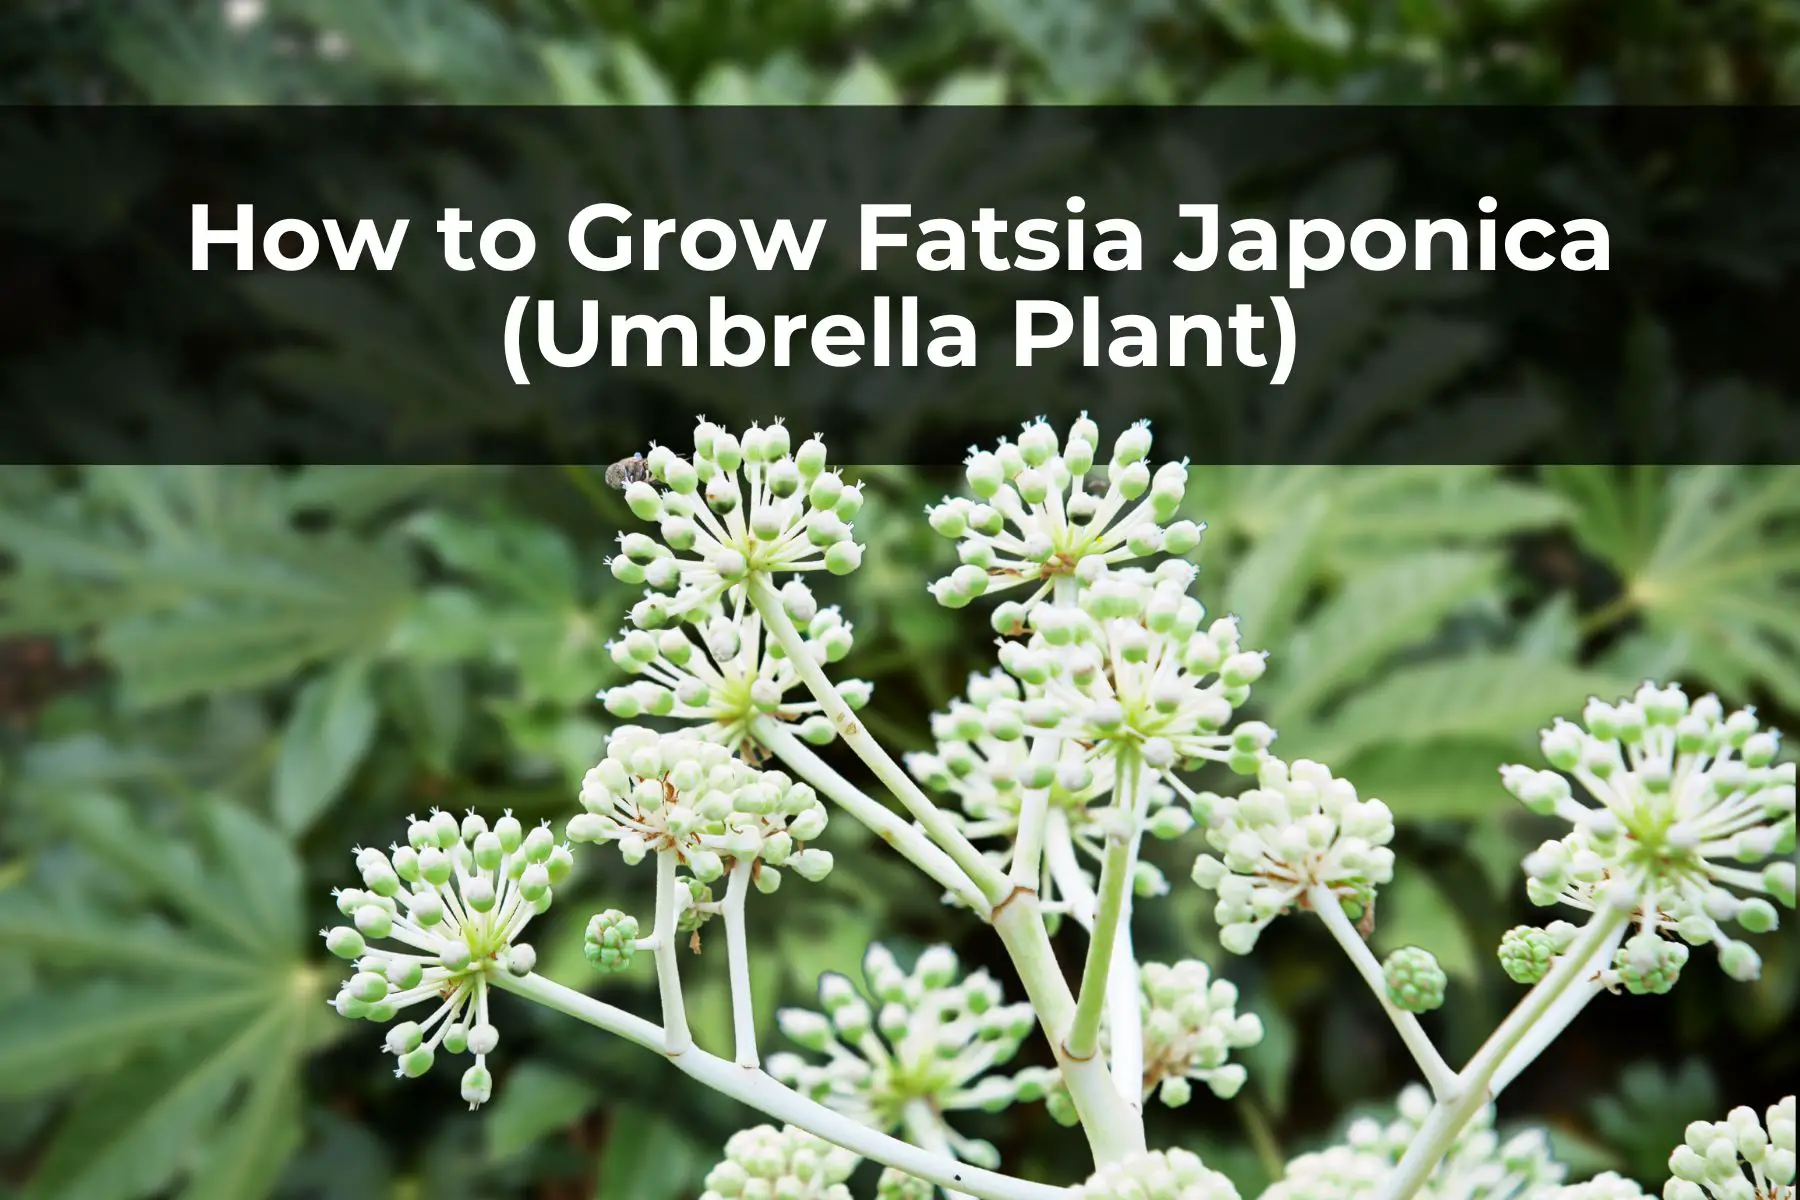 How to Grow Fatsia Japonica (Umbrella Plant)